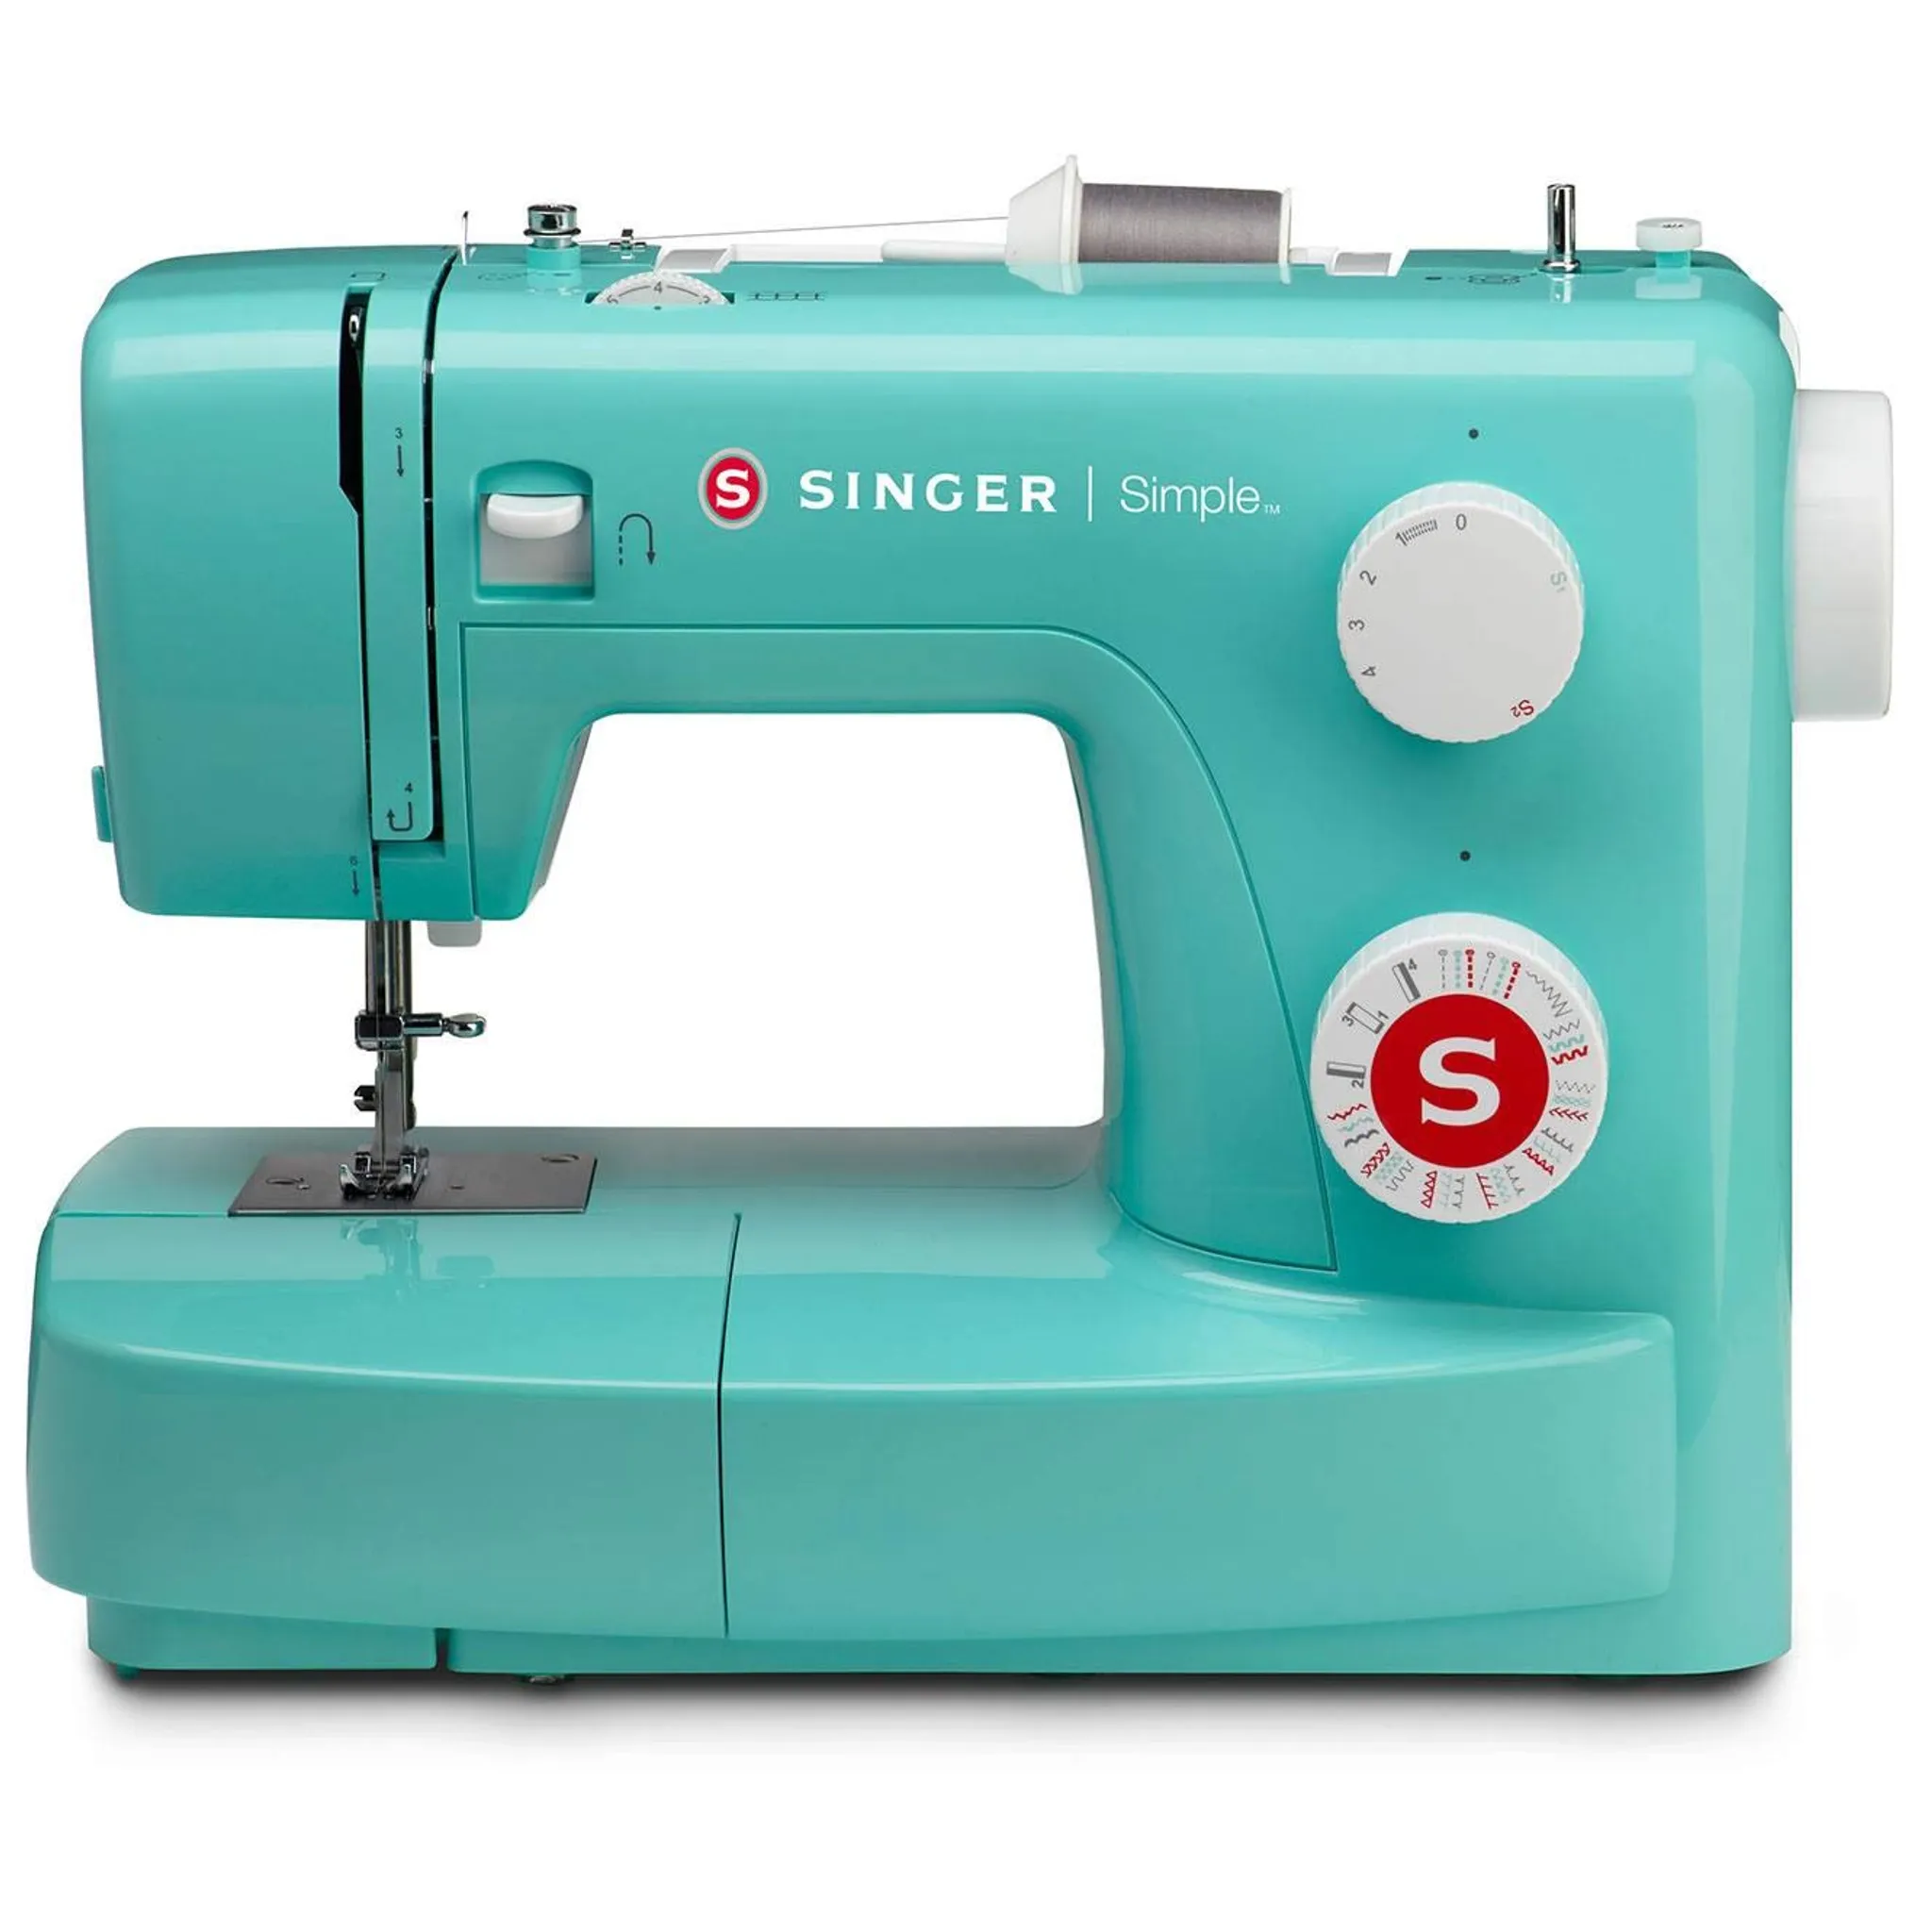 Singer 3223 Sewing Machine Turquoise